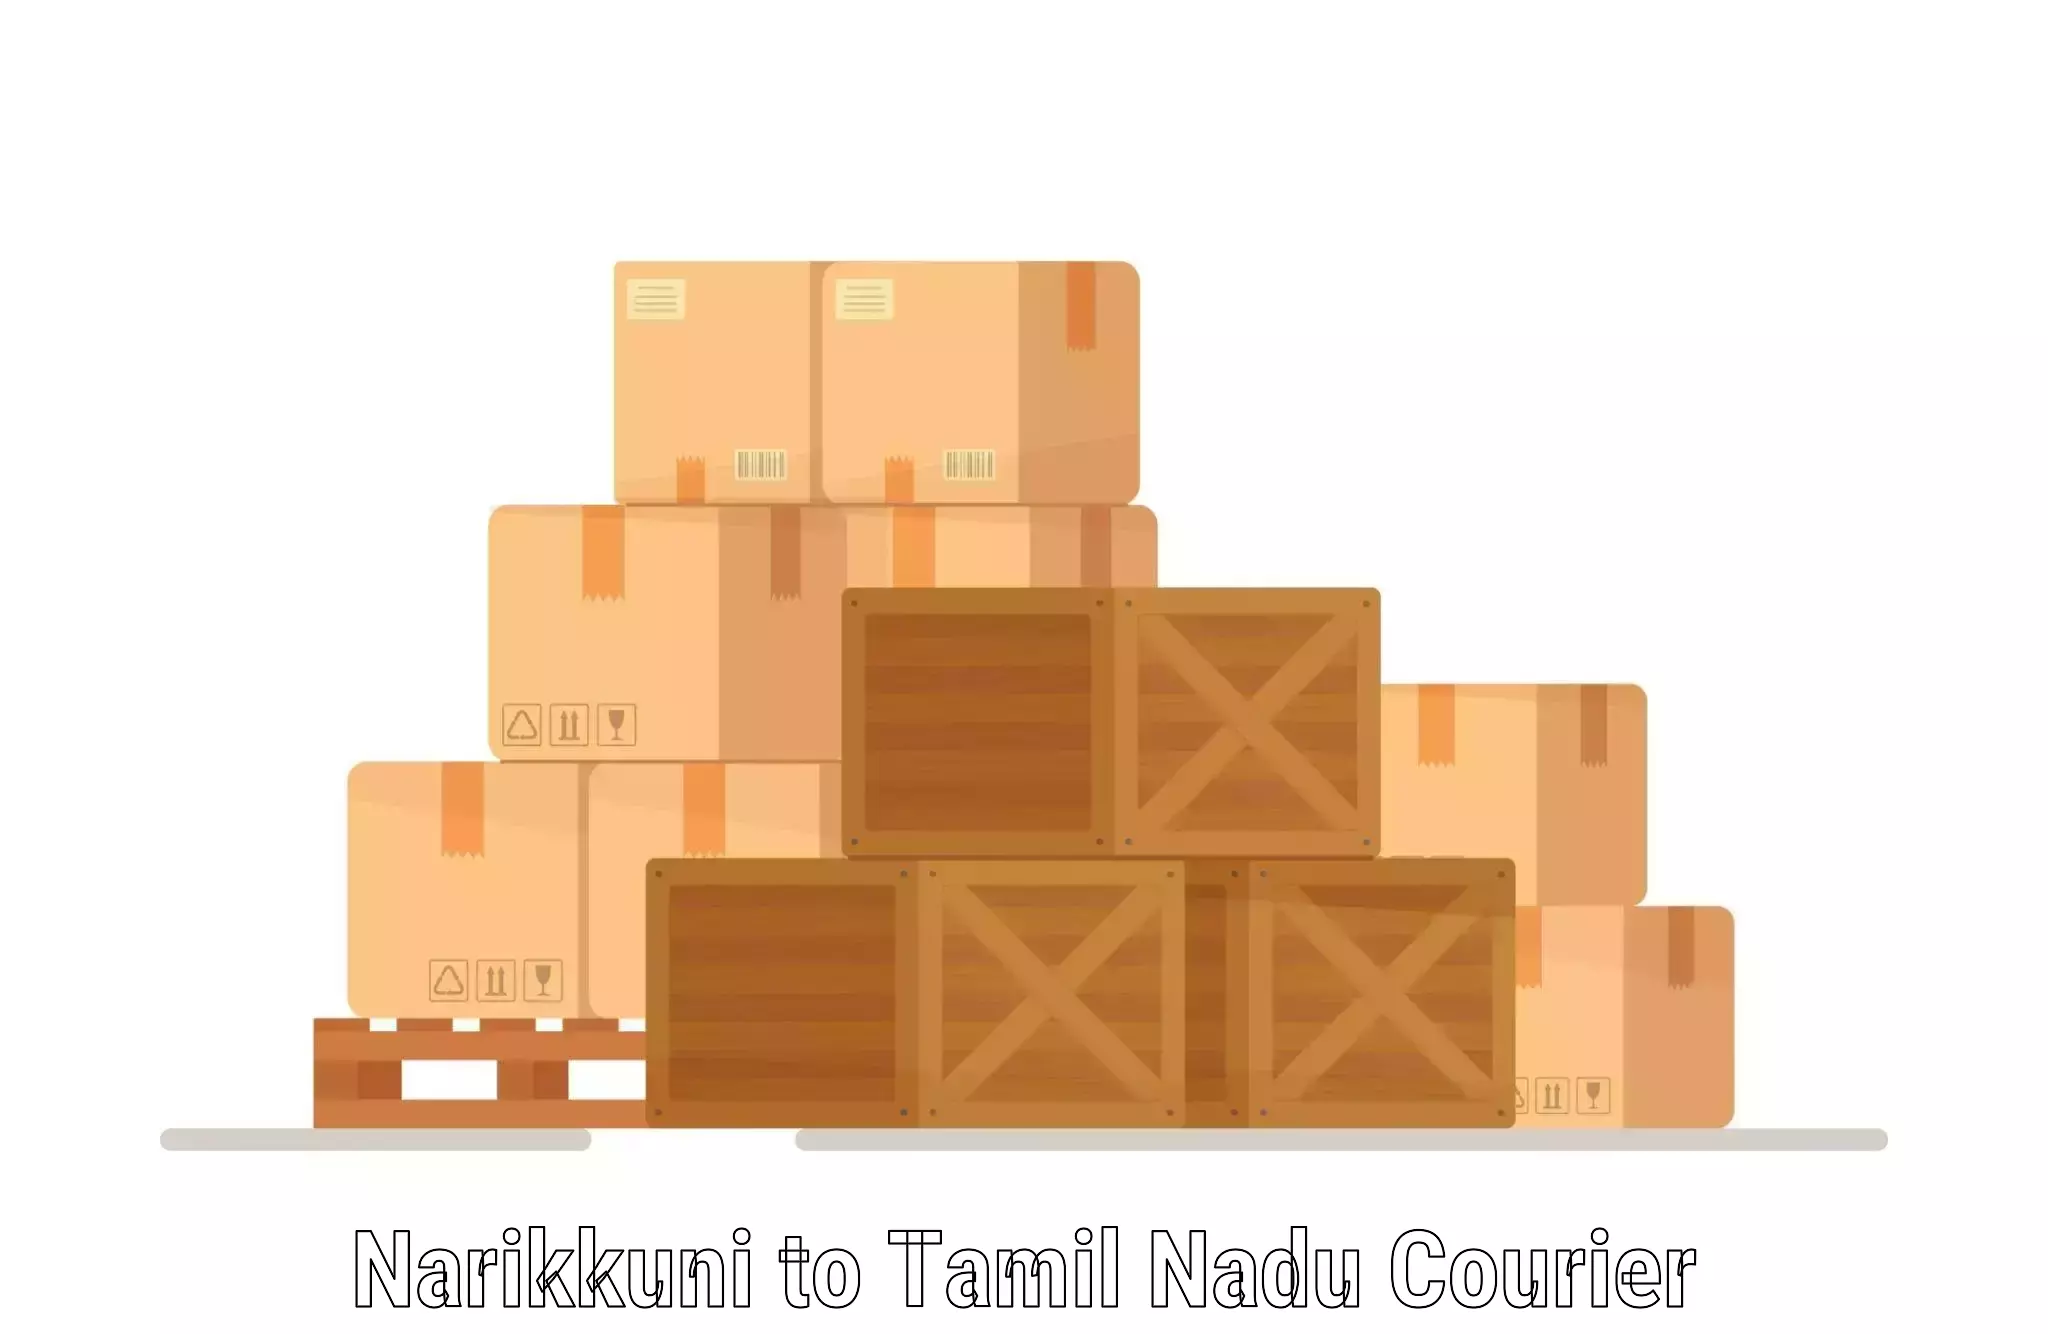 Enhanced shipping experience Narikkuni to Tirunelveli